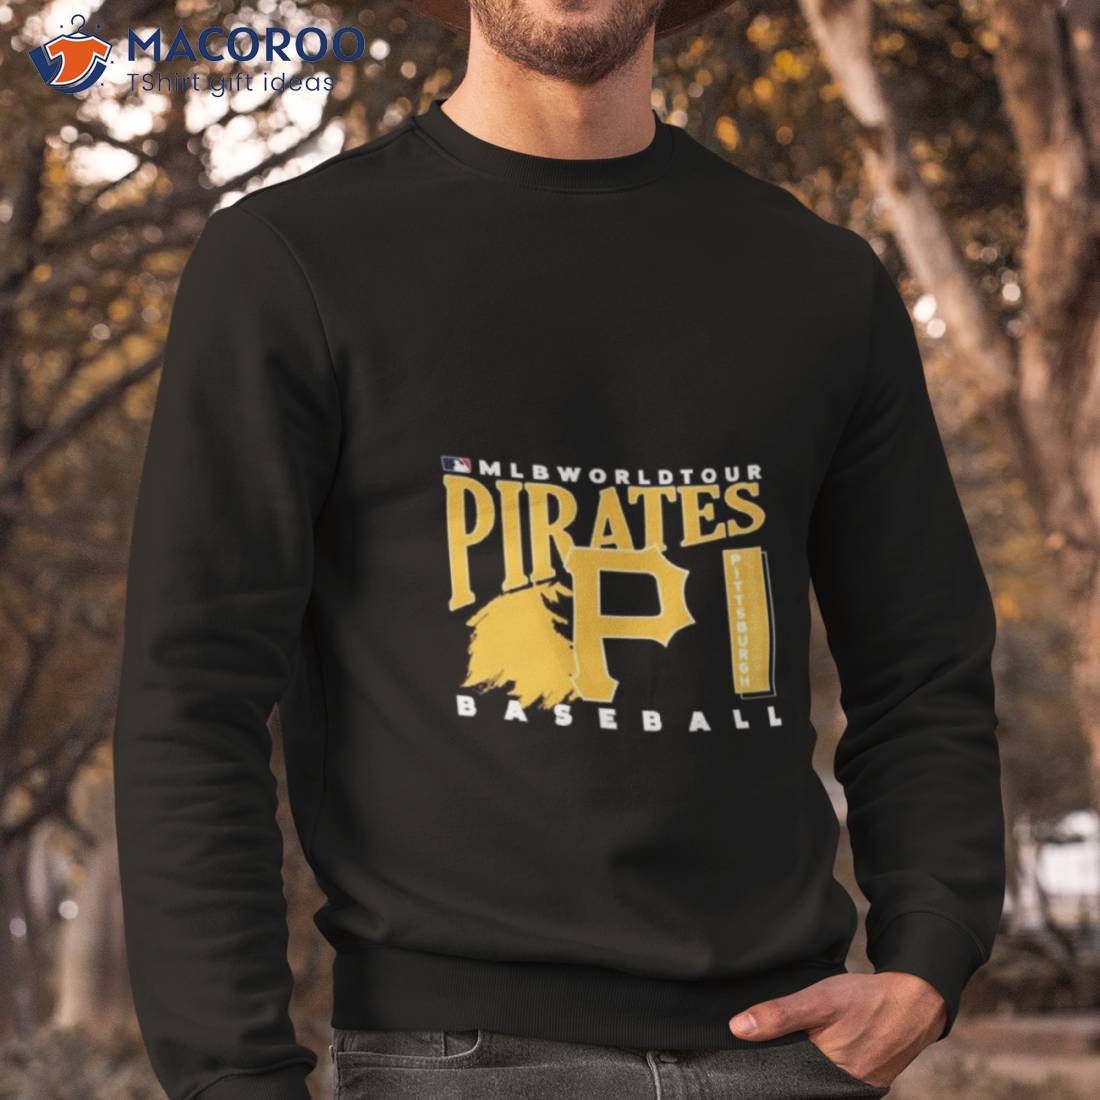 pittsburgh pirate t shirt